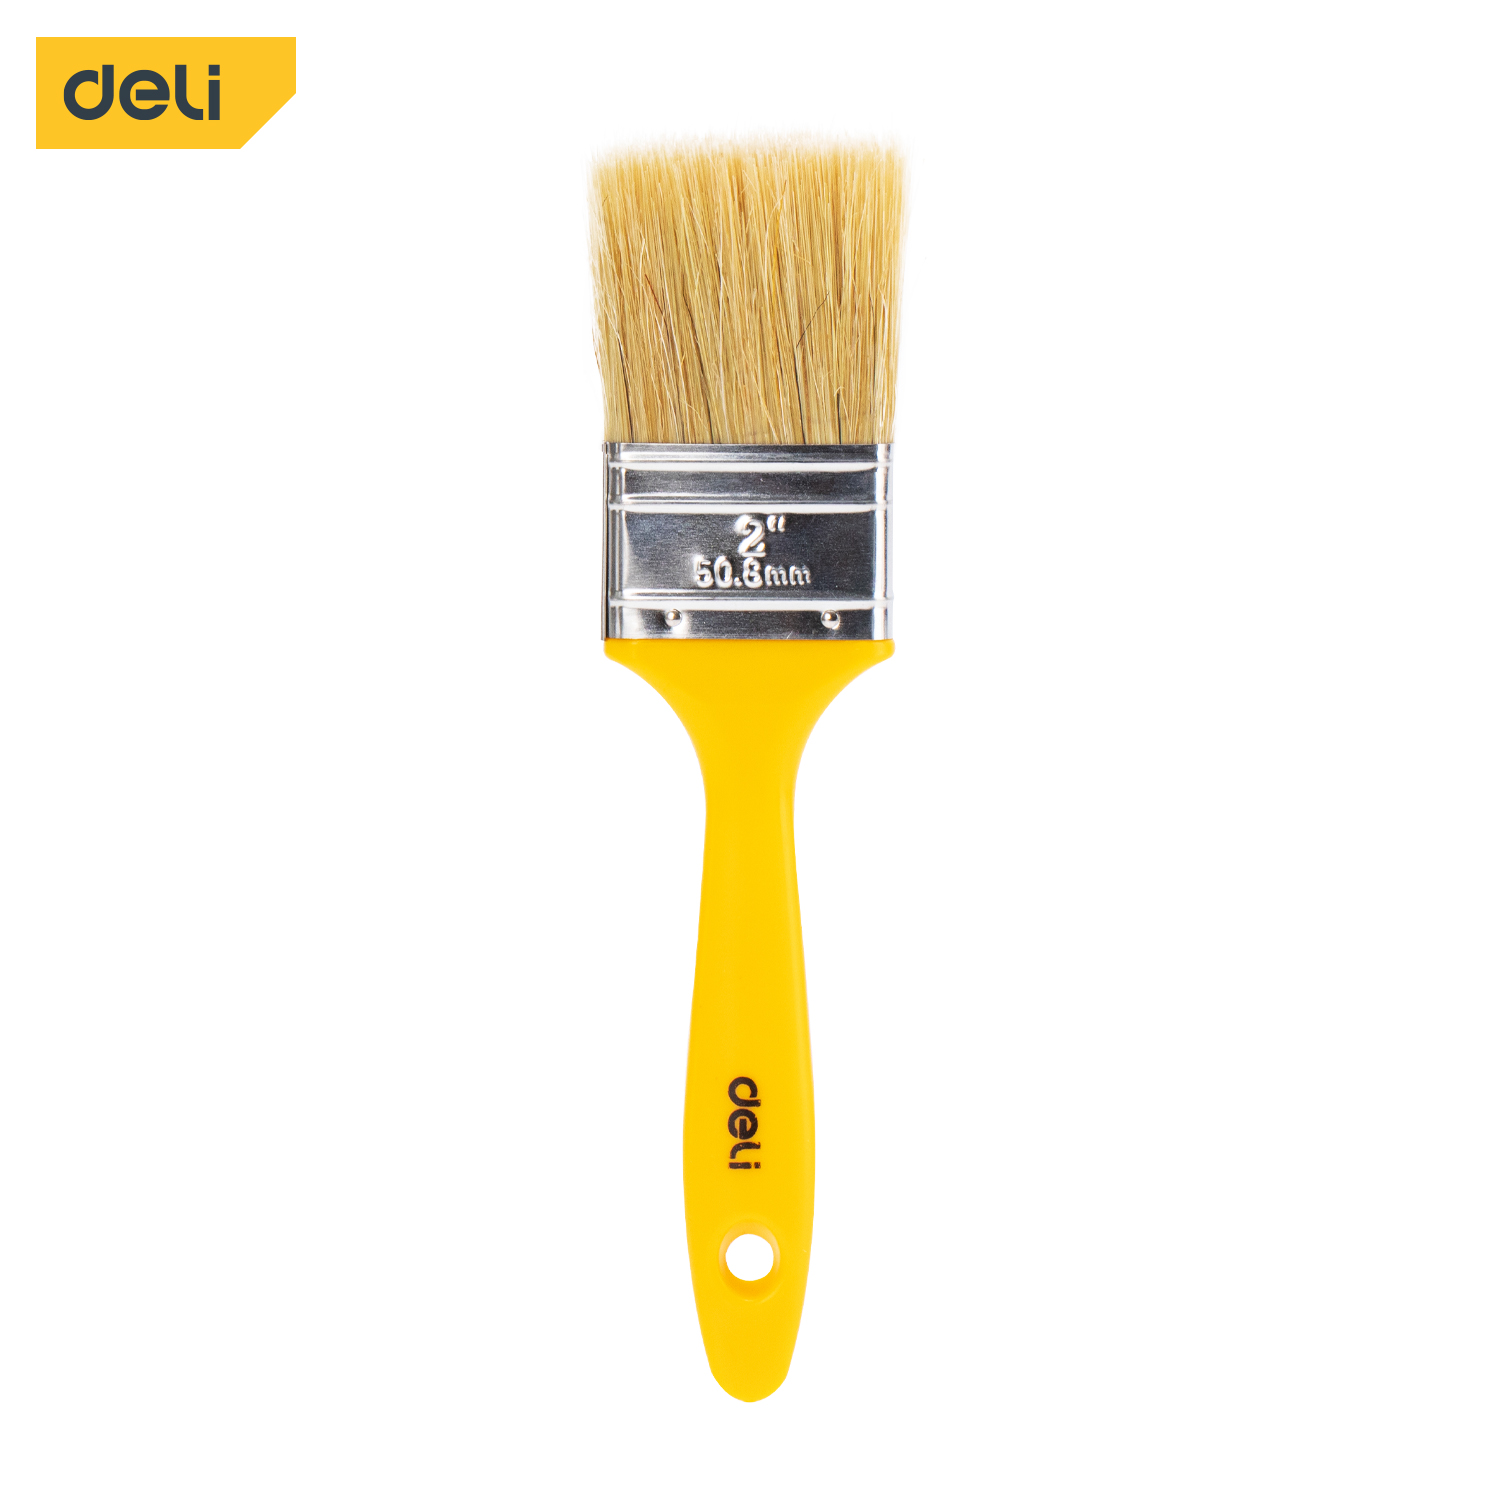 Deli-EDL509112 Paint Brush